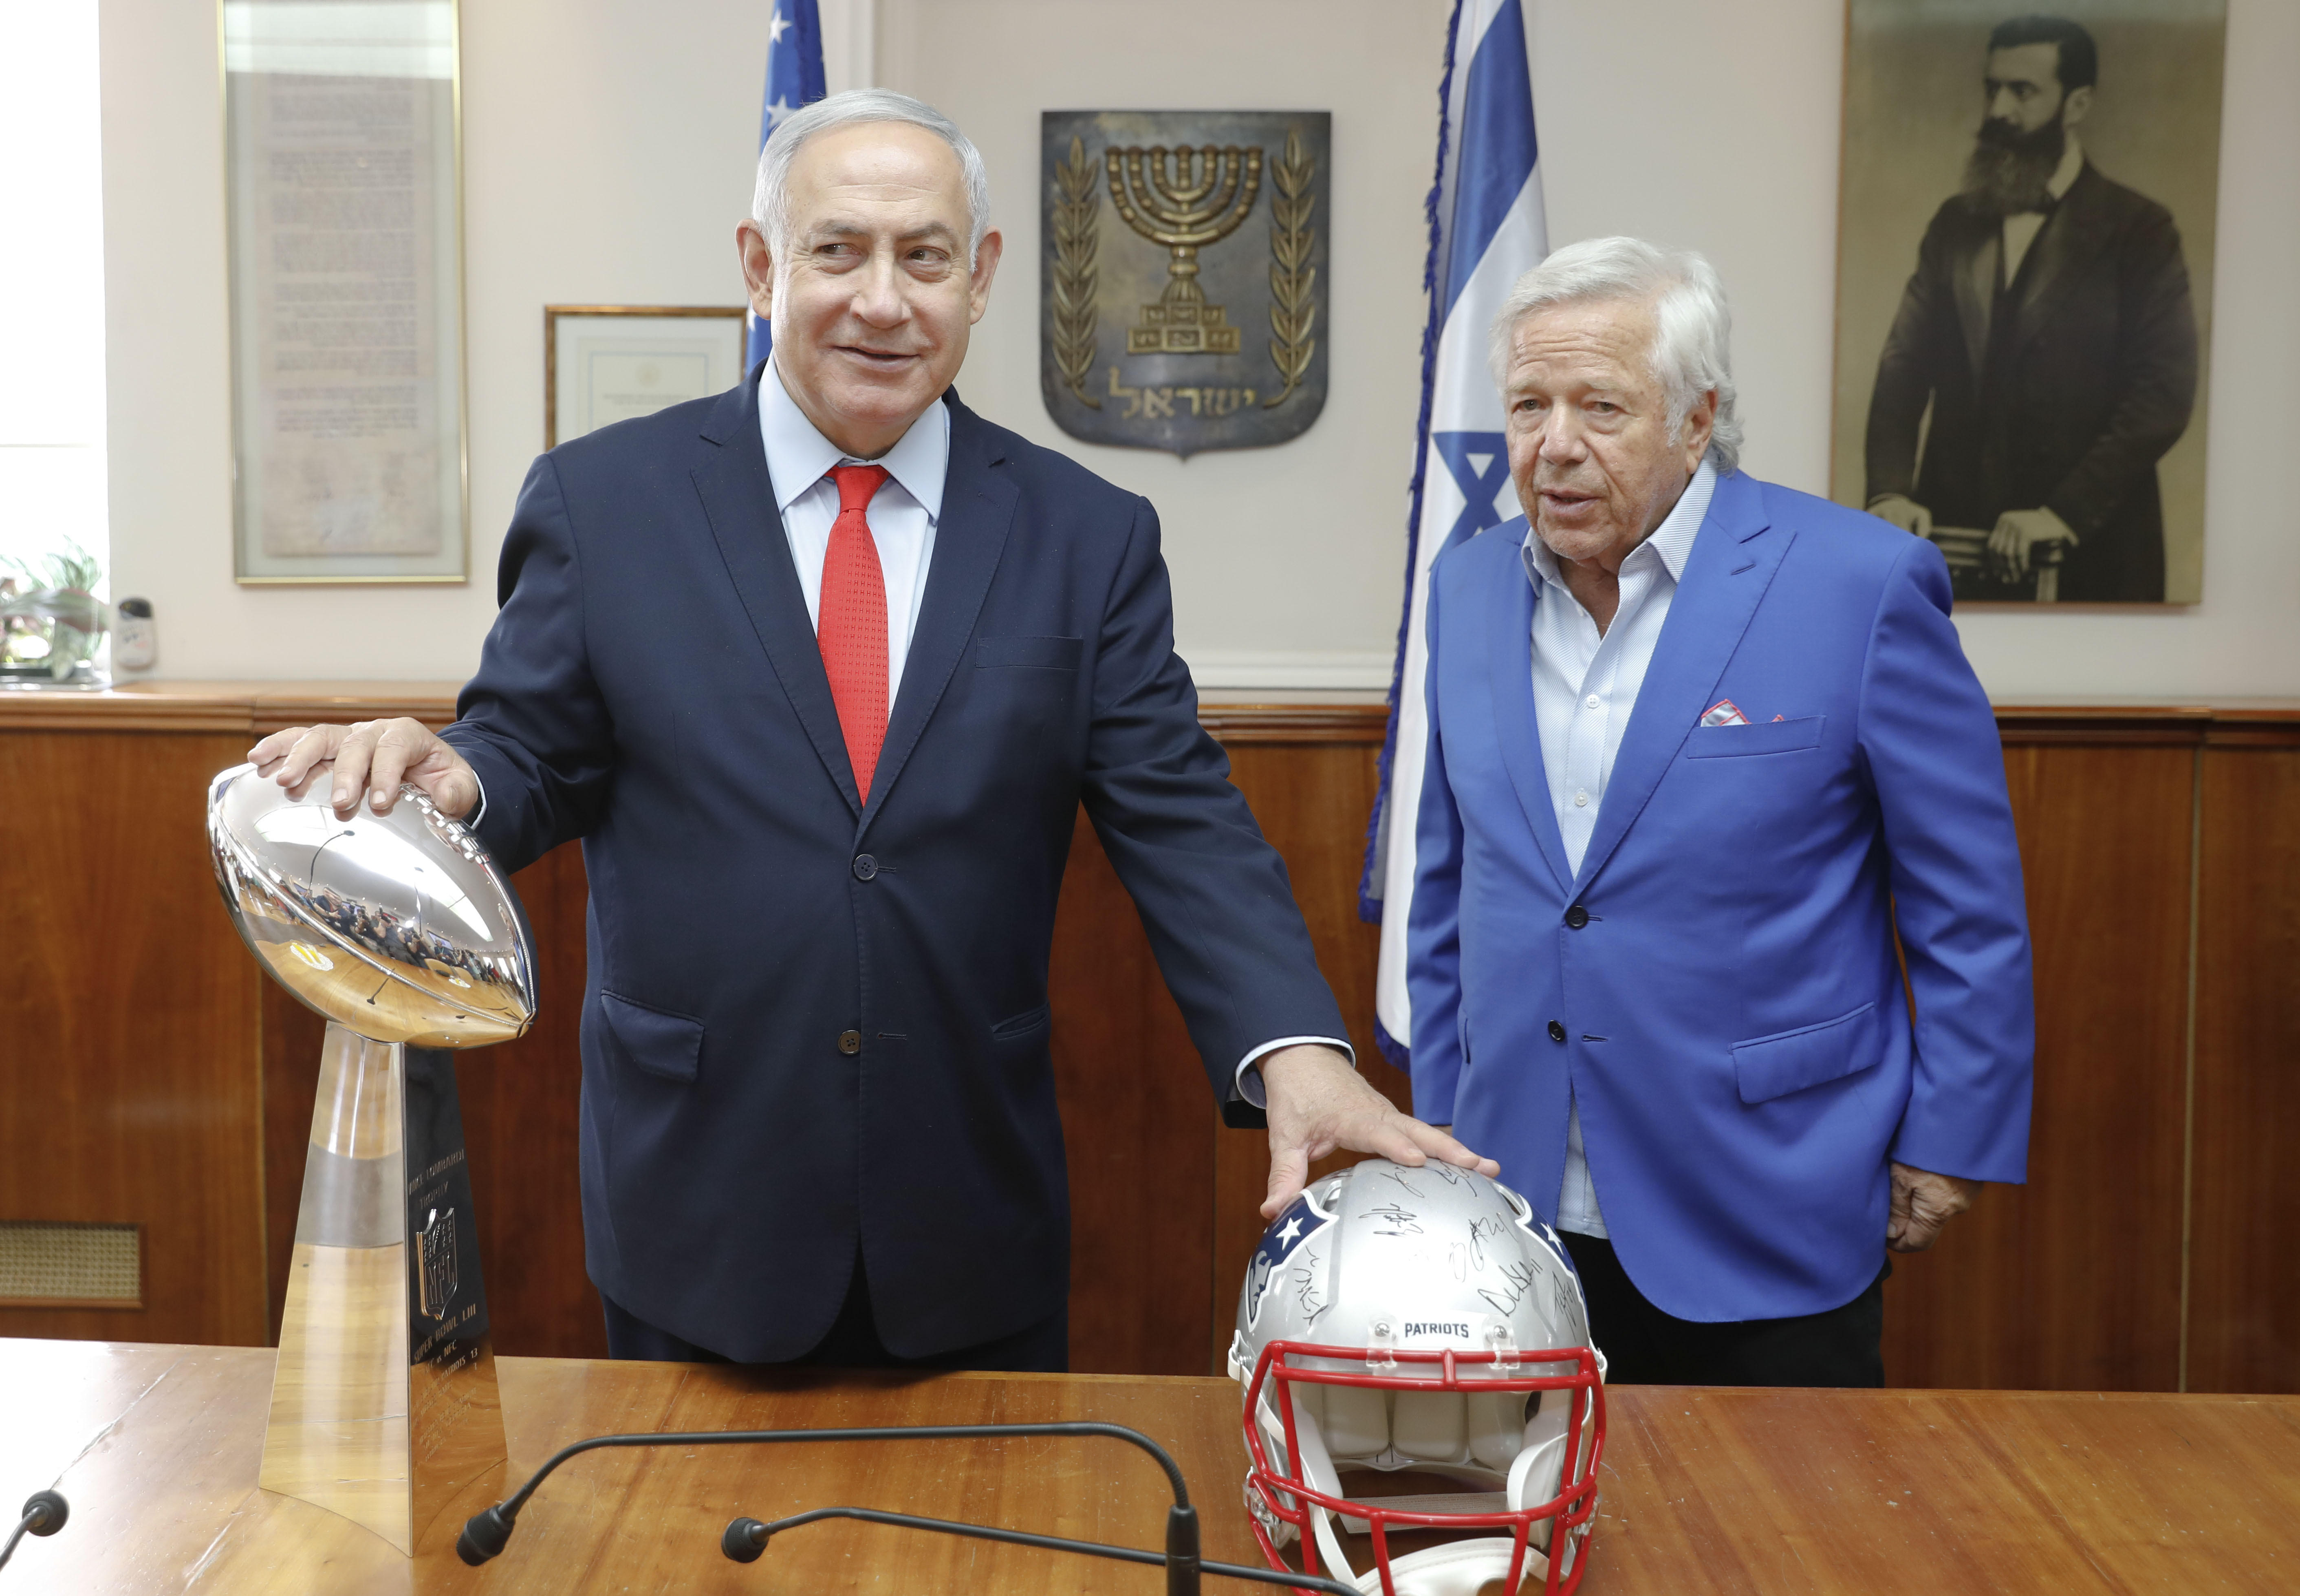 Robert Kraft with Prime Minister Netanyahu